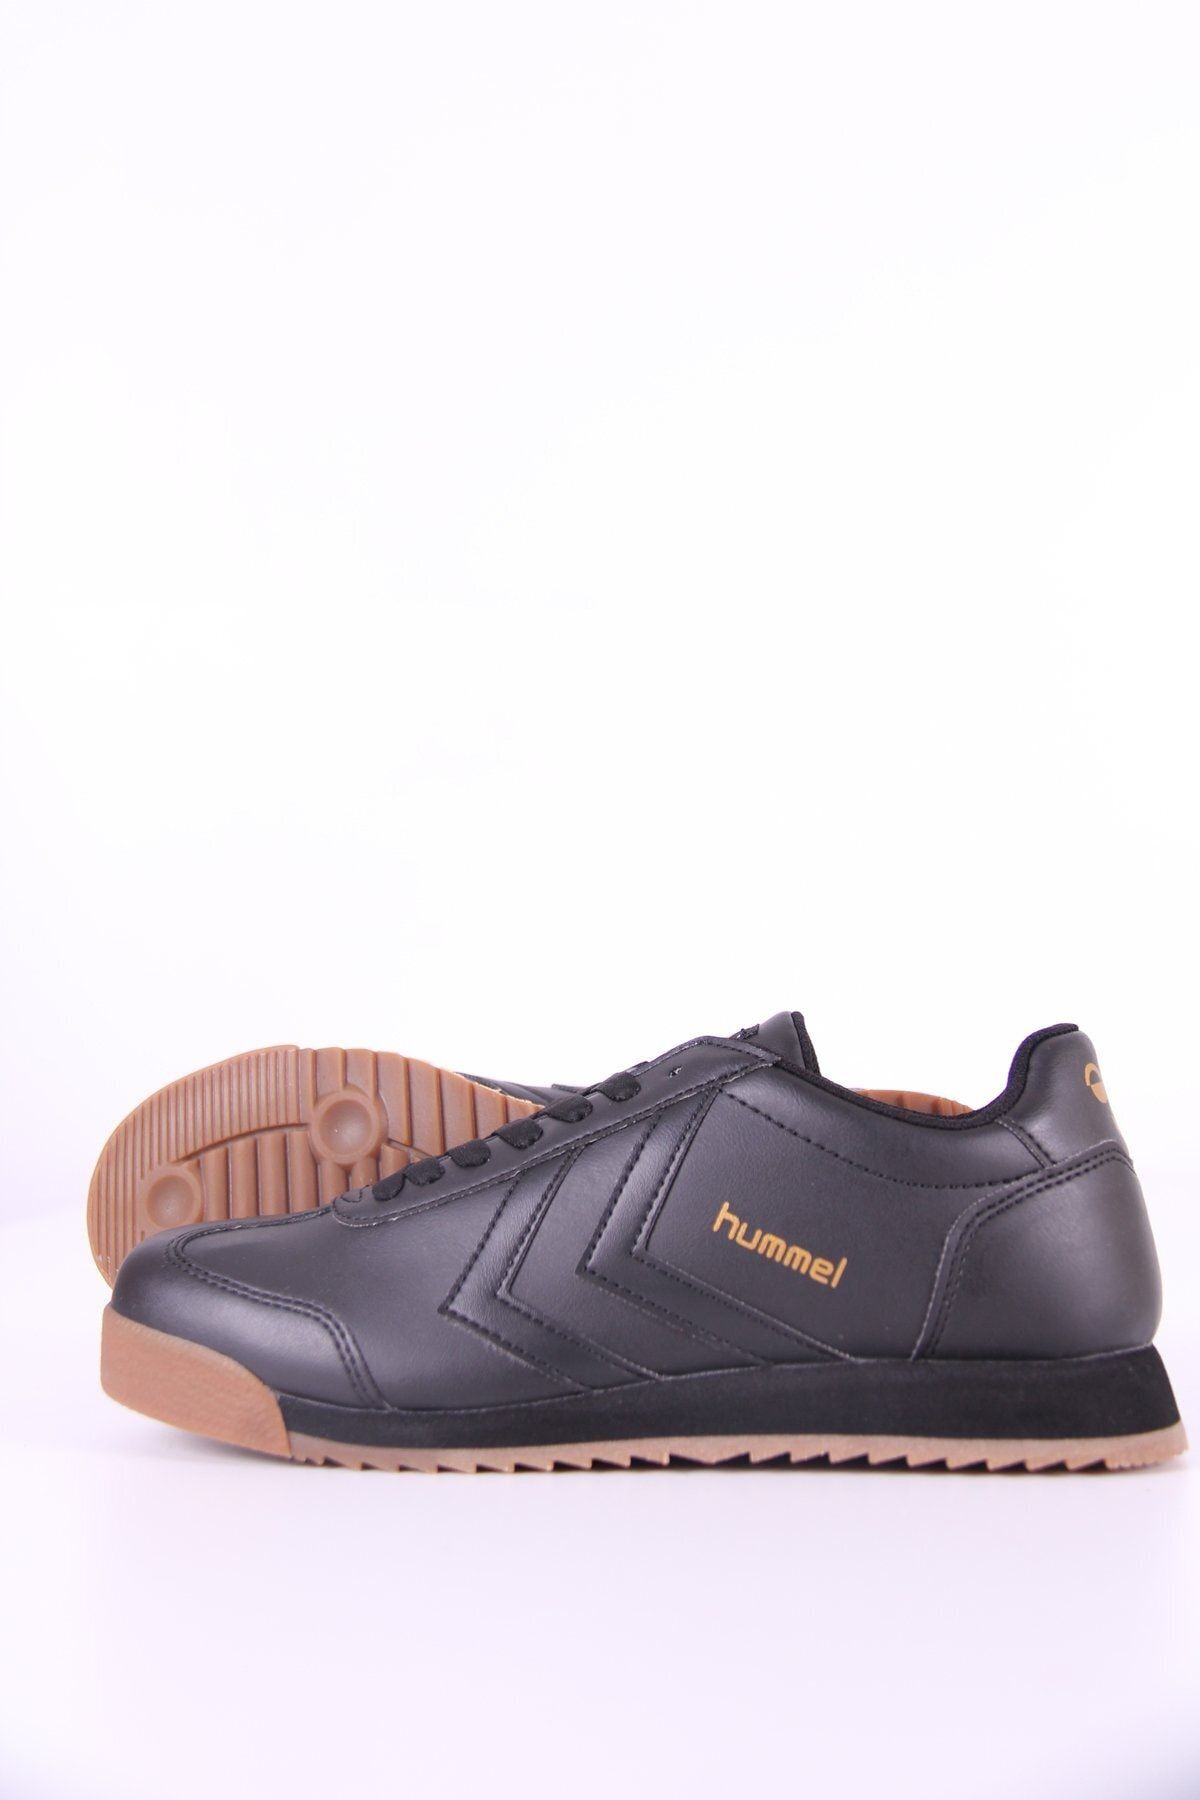 hummel Unisex Siyah Messmer Spor Ayakkabı 206308-2001